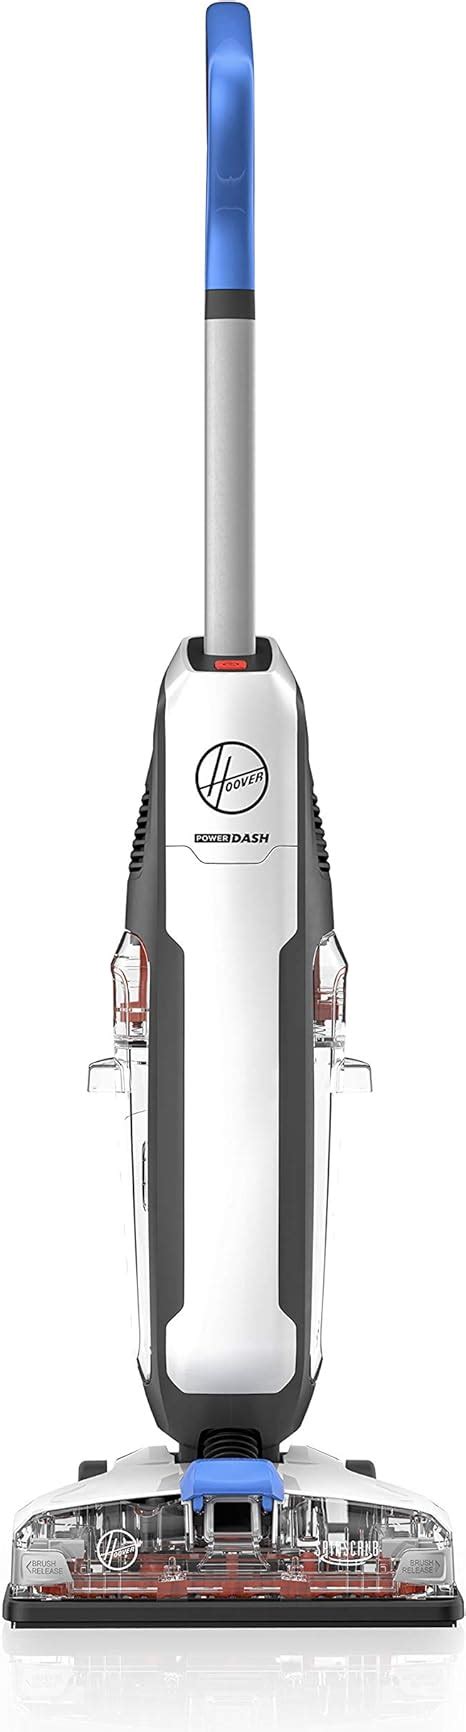 amazoncom hoover powerdash pet hard floor cleaner machine wet dry vacuum fh white